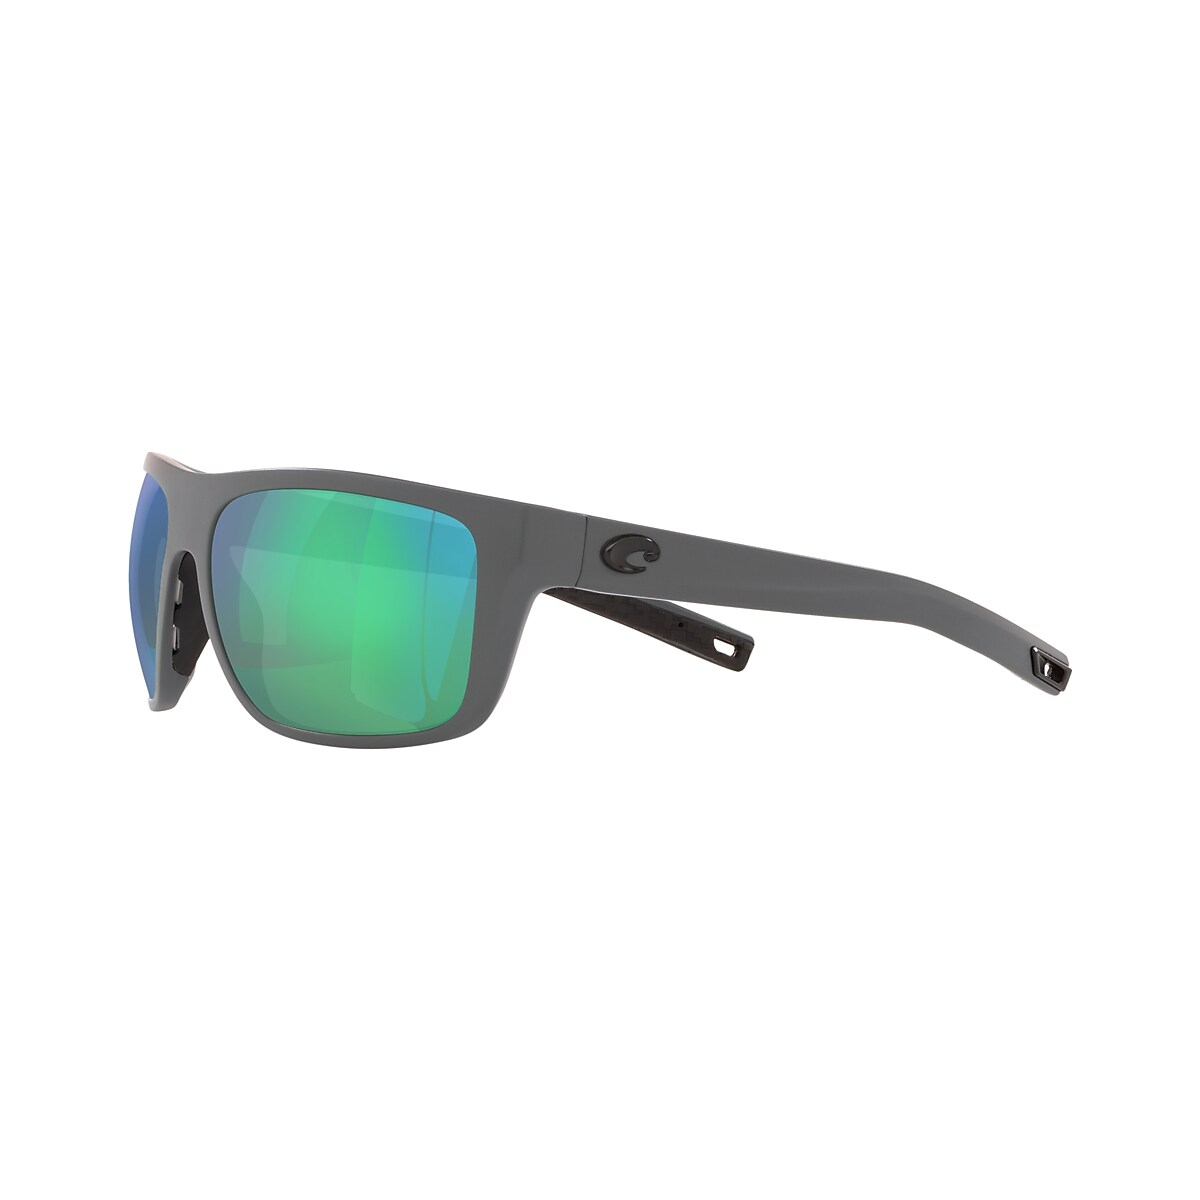 Broadbill Polarized Sunglasses in Green Mirror